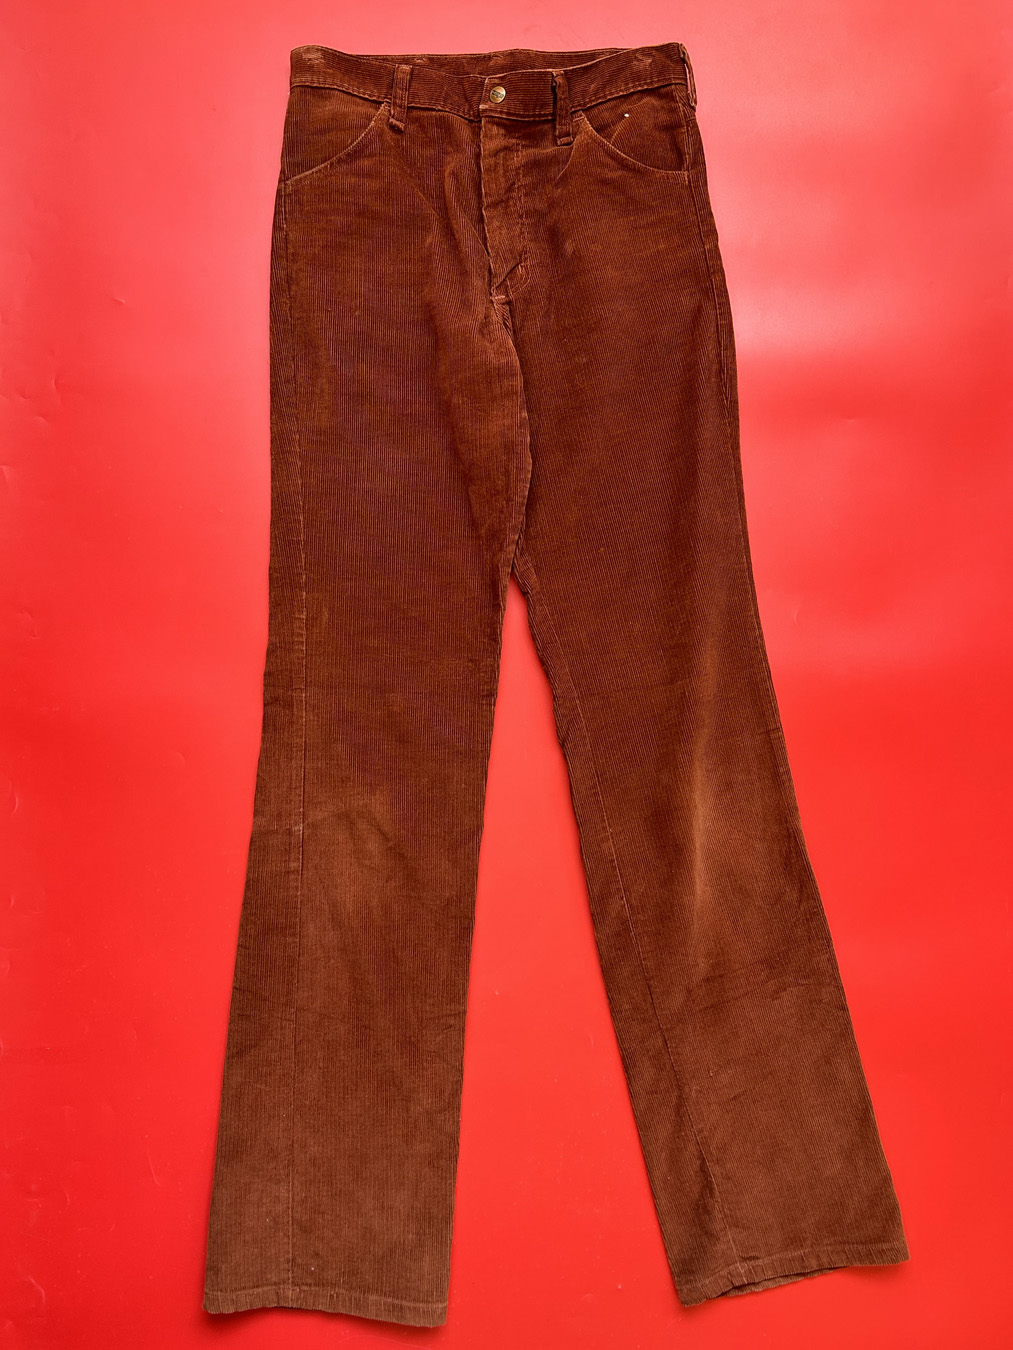 28” Wrangler Corduroy Pants - 5 Star Vintage